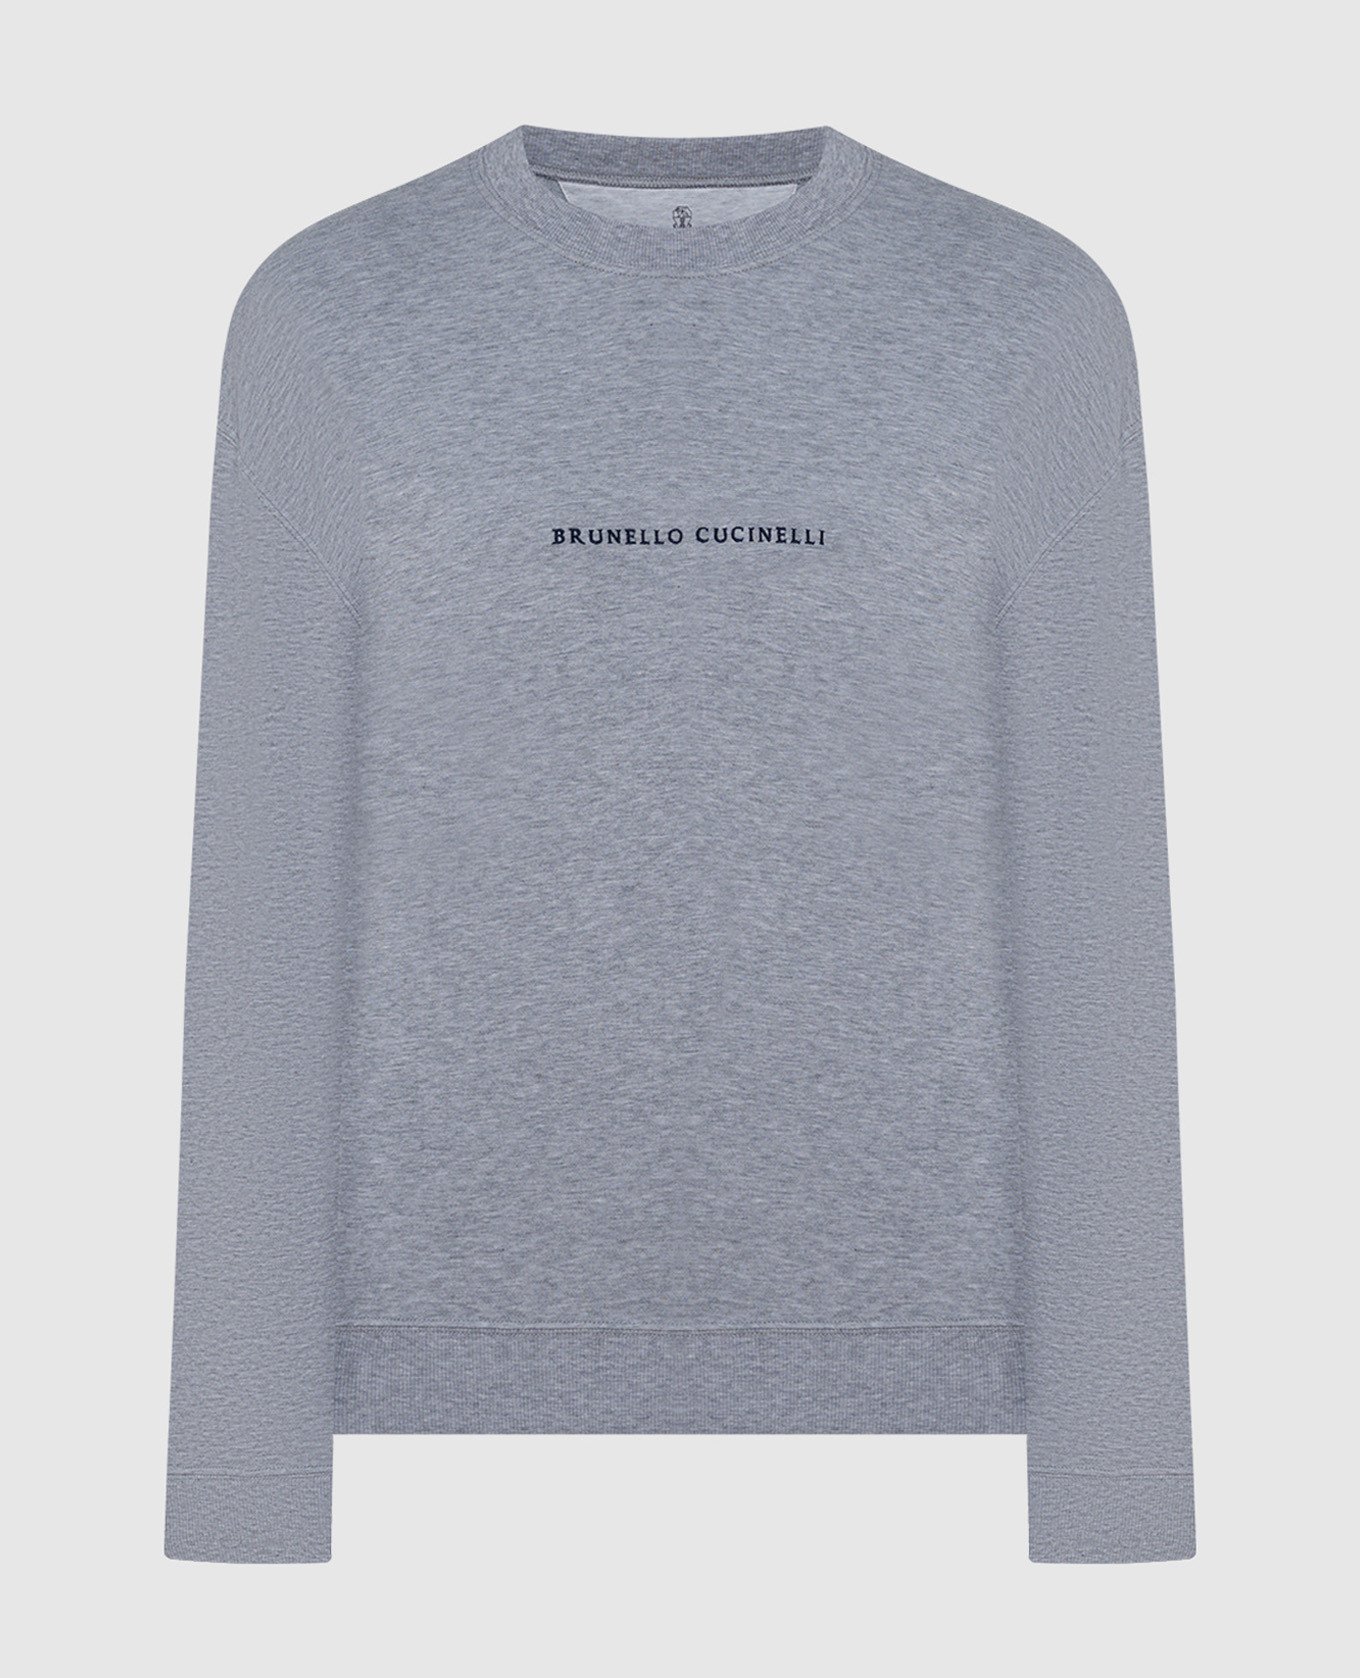 Gray sweatshirt with logo embroidery